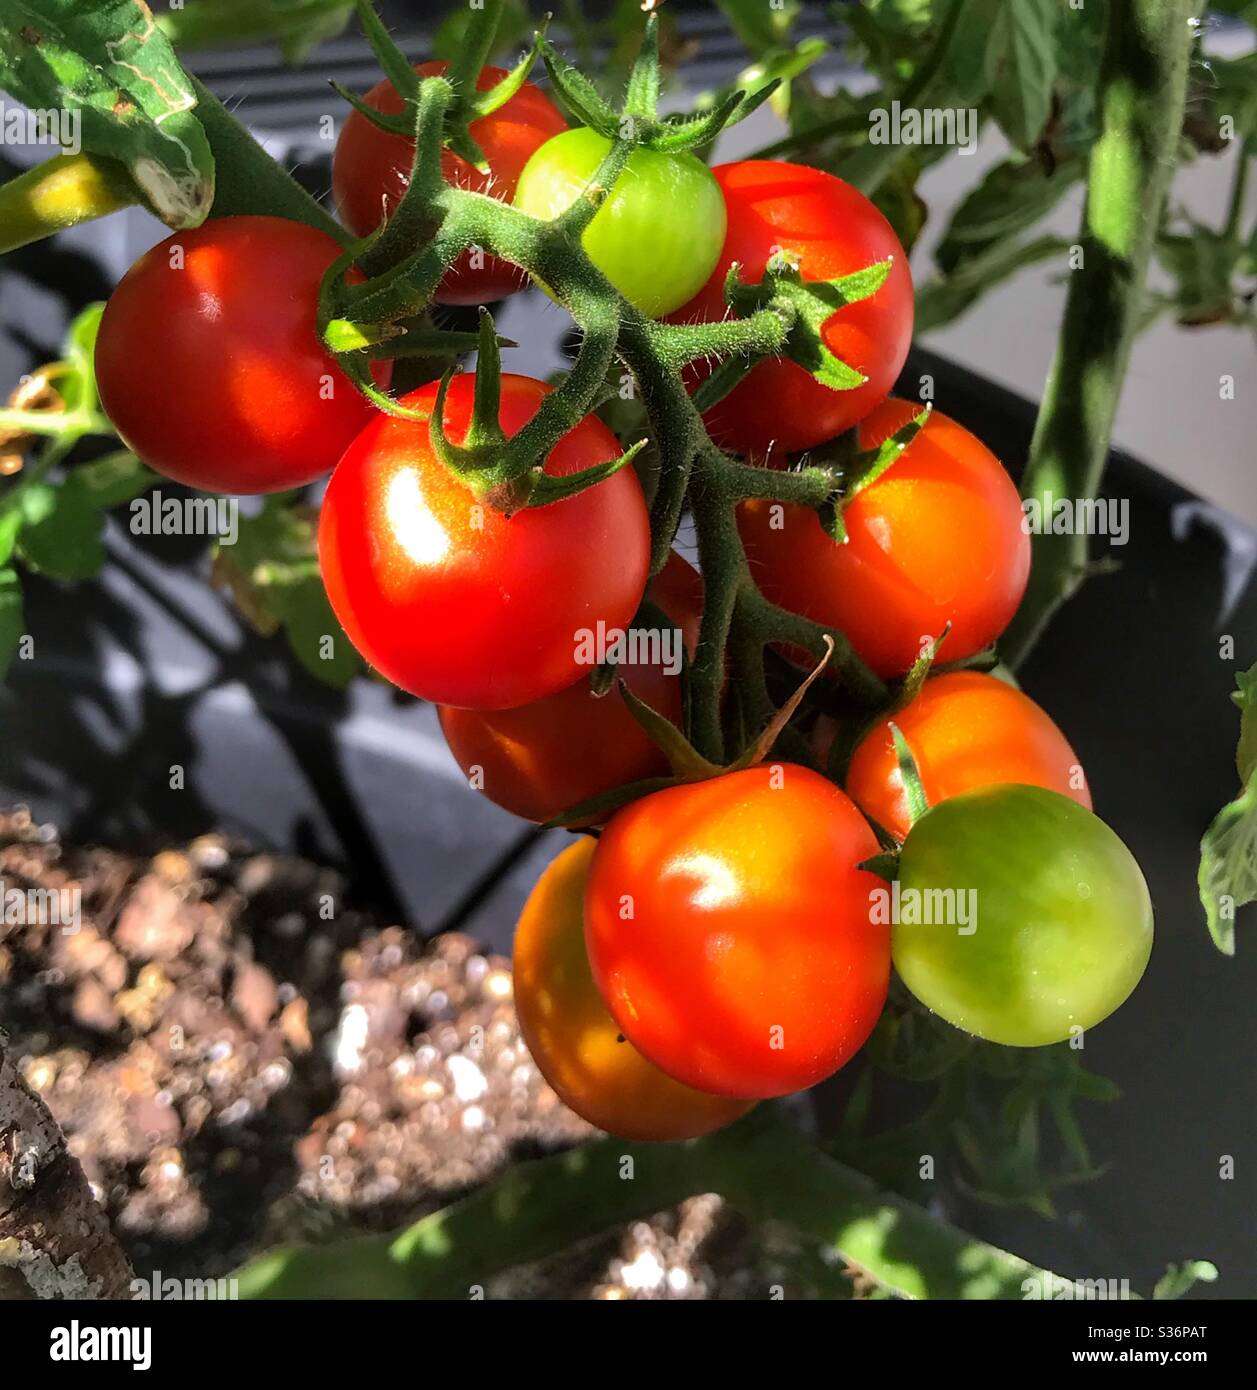 Cherry tomatoes ripening on the vine Stock Photo